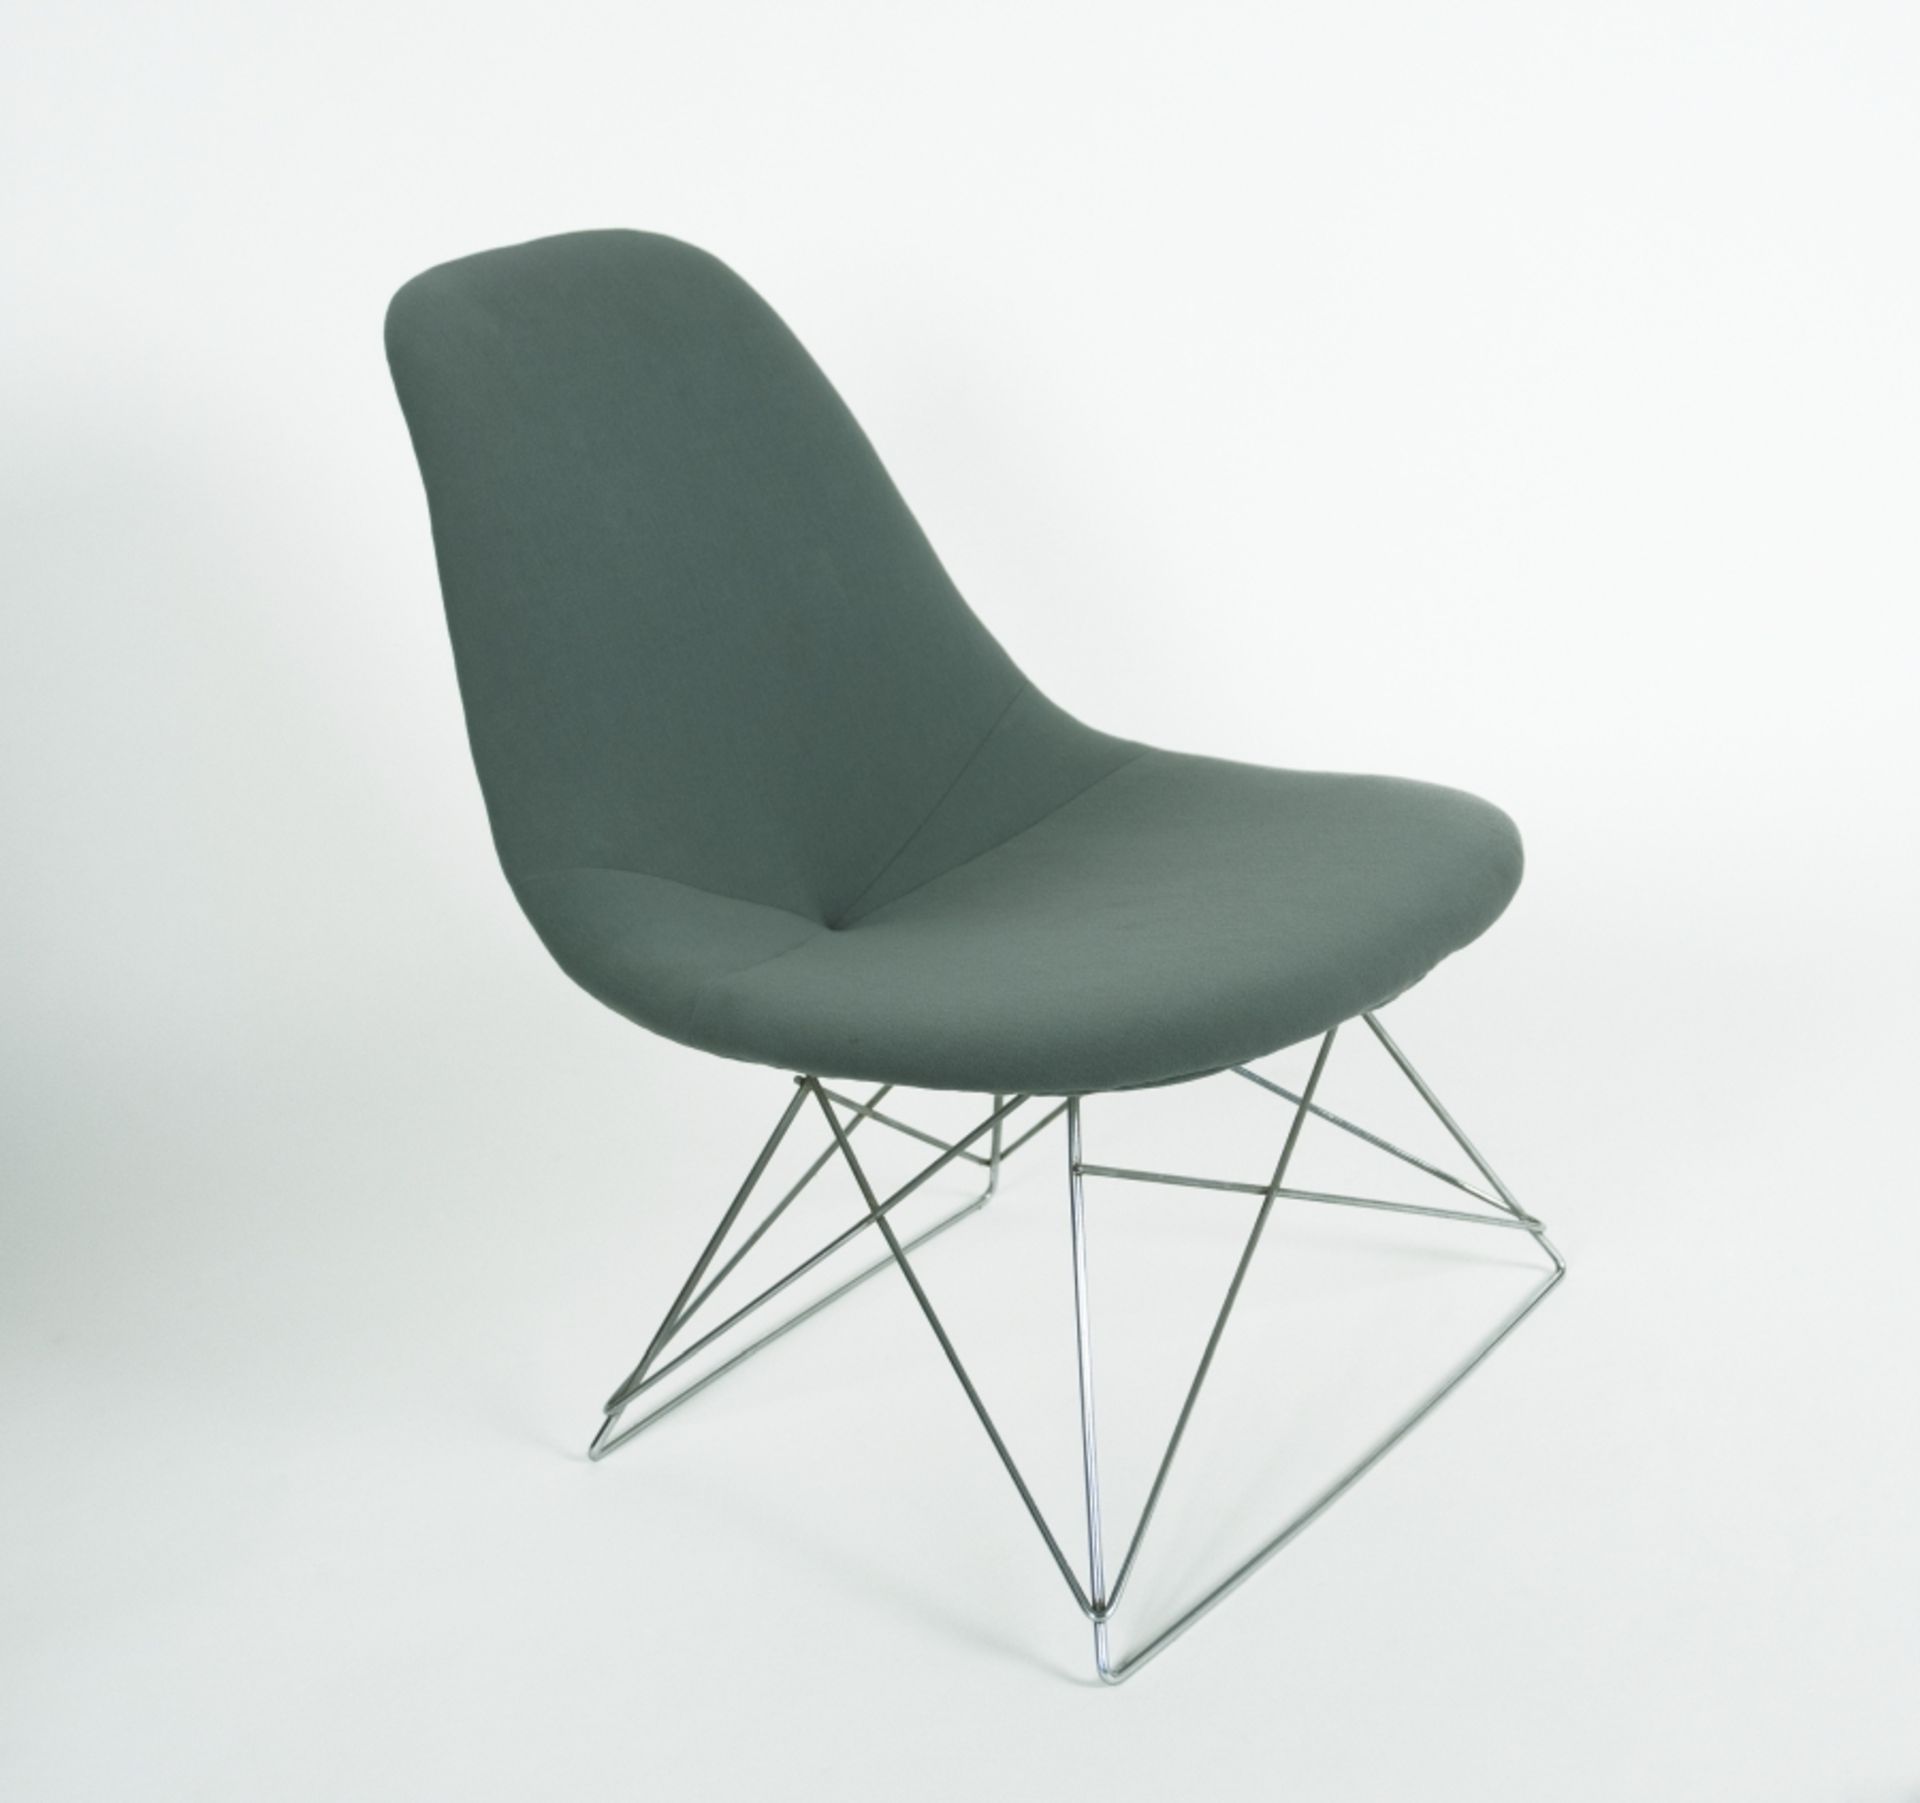 Ray und Charles Eames1912/1907 - 1988/1978Side chair mit low rad baseStahlgestell, verc